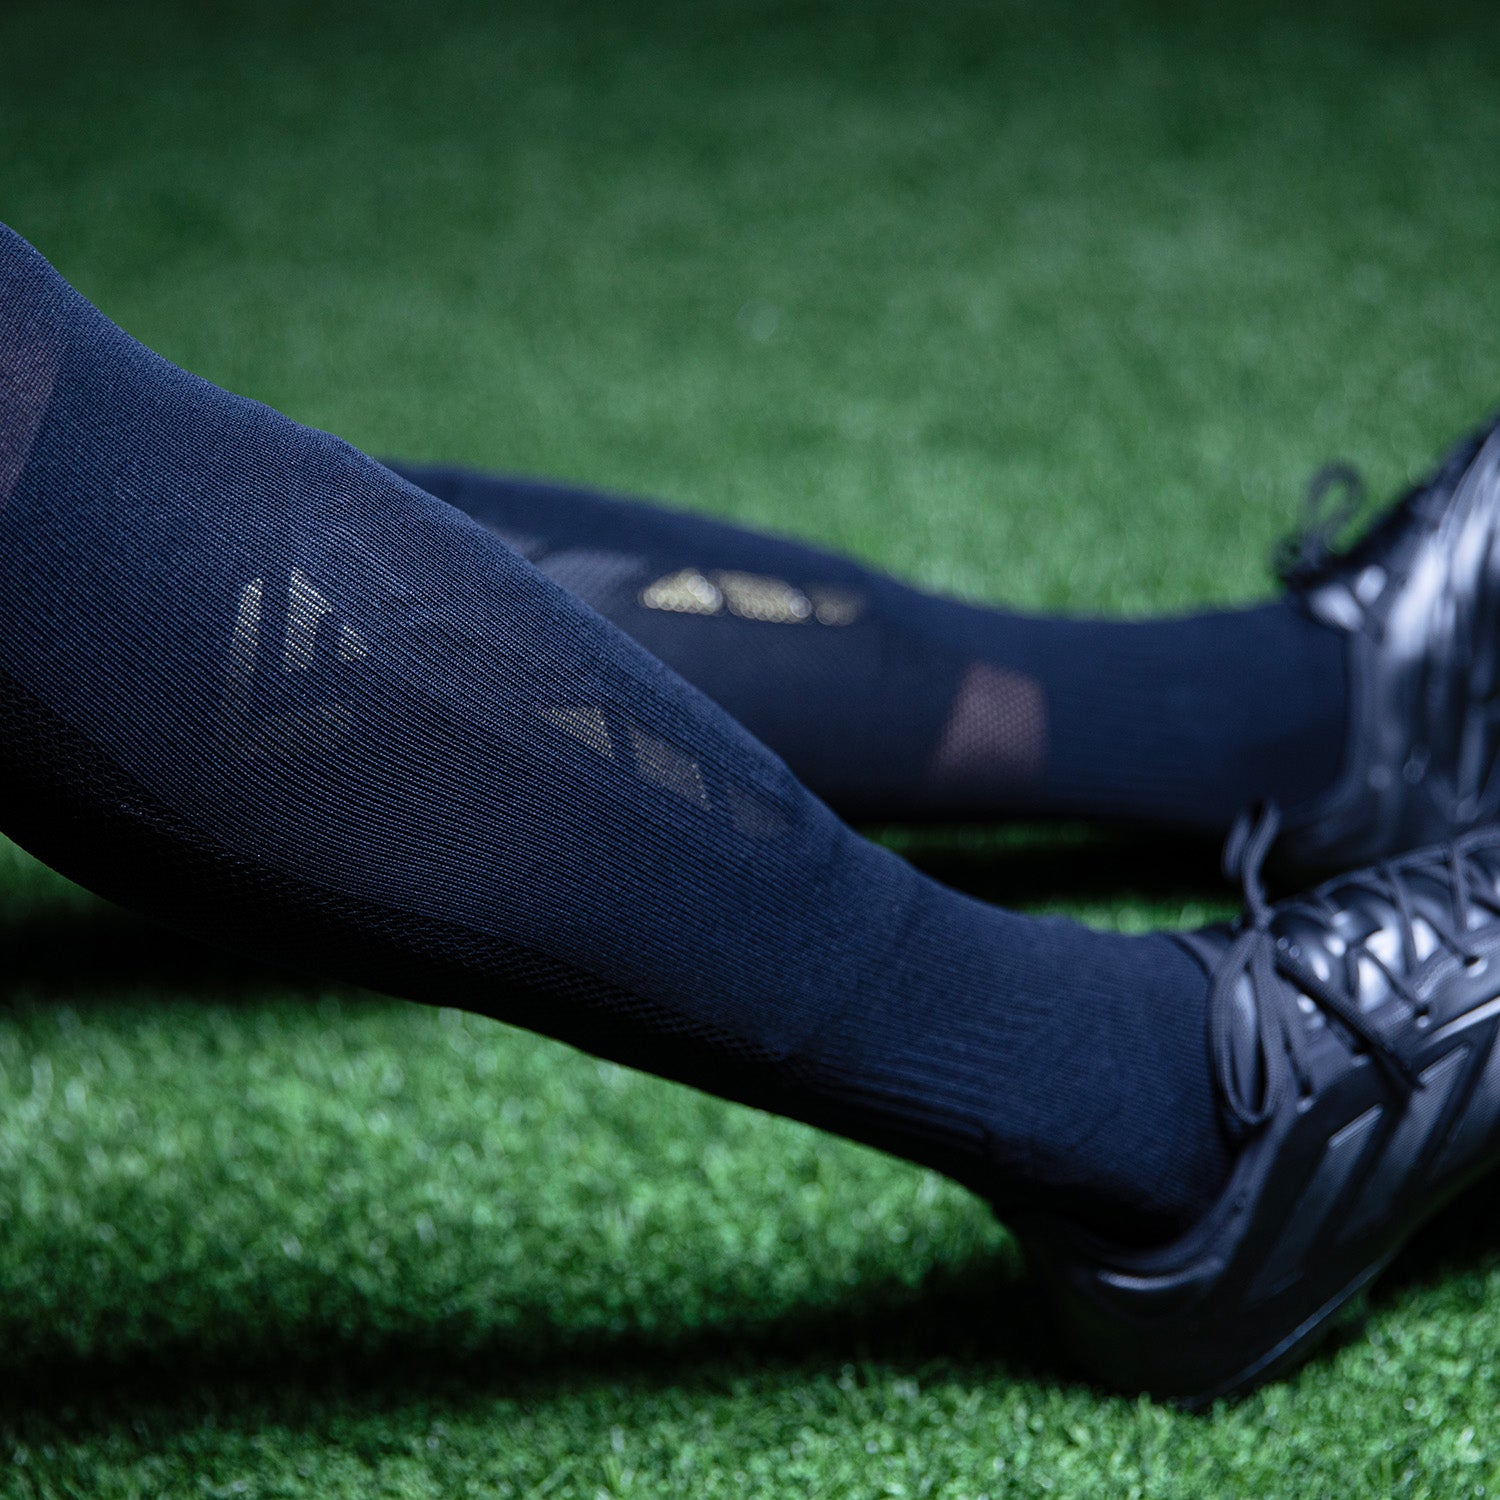 Elite X Shin Guard Soccer Premium Shin Pads Black Sleek Football Flexible Machine Washable Shin Pads Lightweight Adult